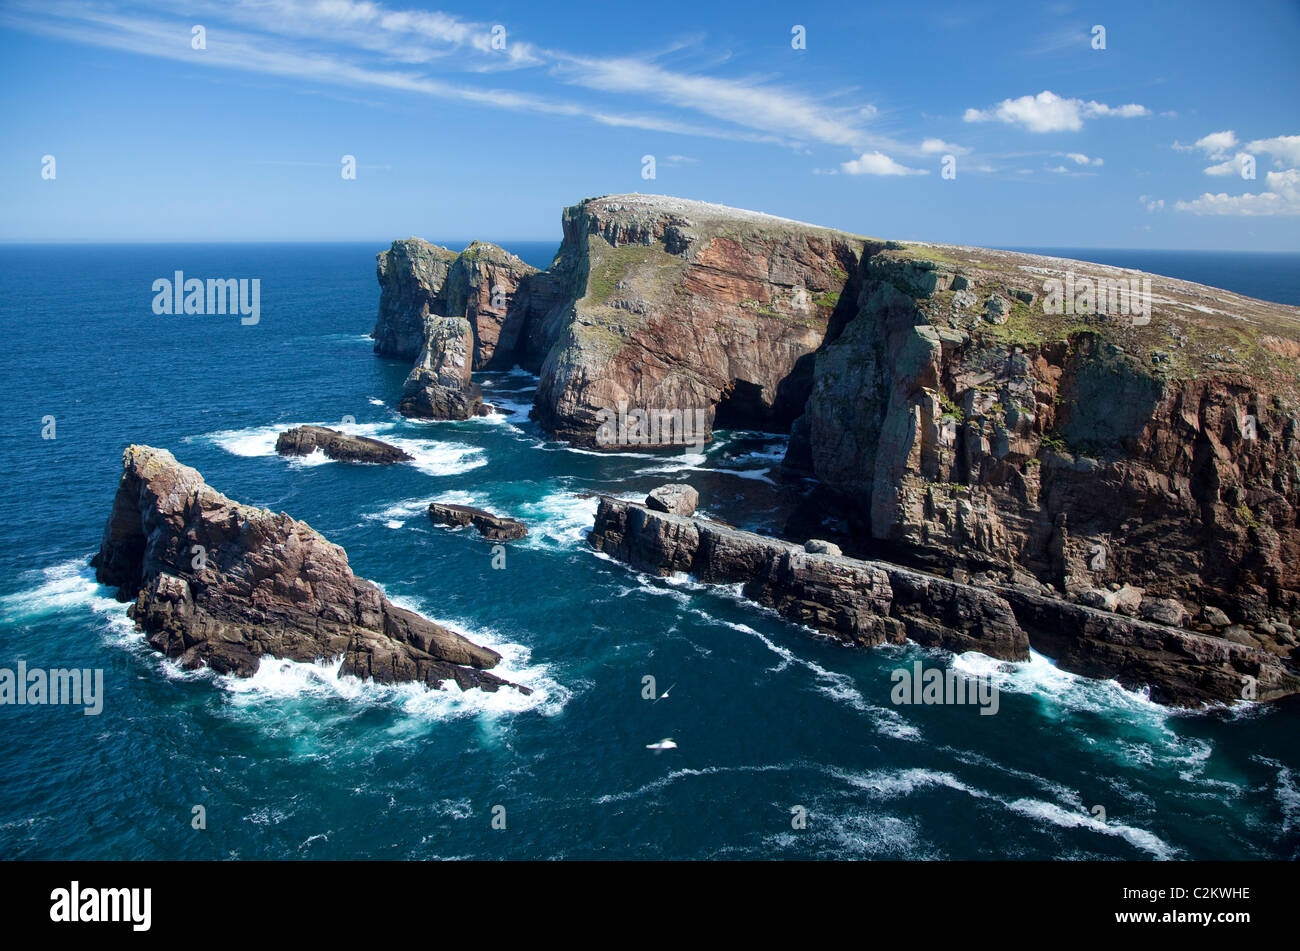 the-cliffs-of-dun-balair-tory-island-co-donegal-ireland-C2KWHE.jpg